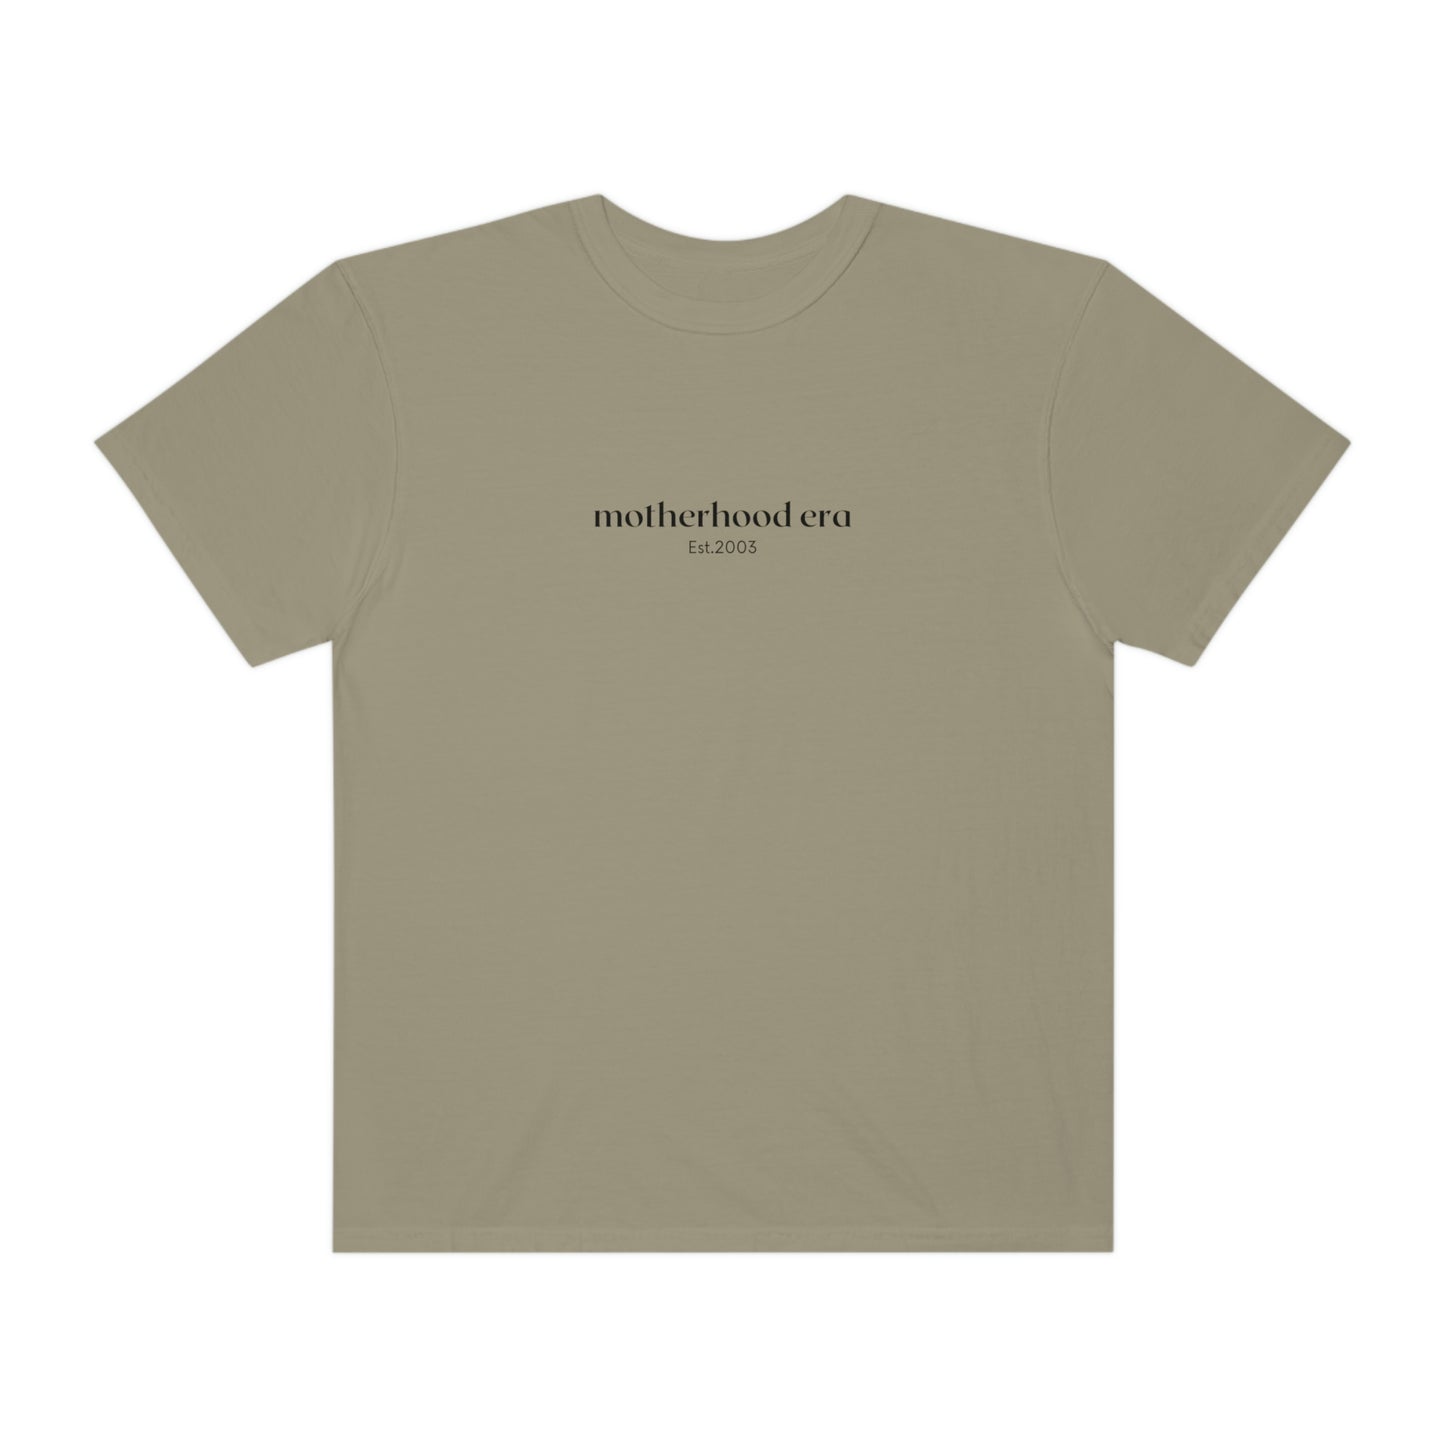 Est. 2003 Motherhood Era Oversized Unisex T-shirt